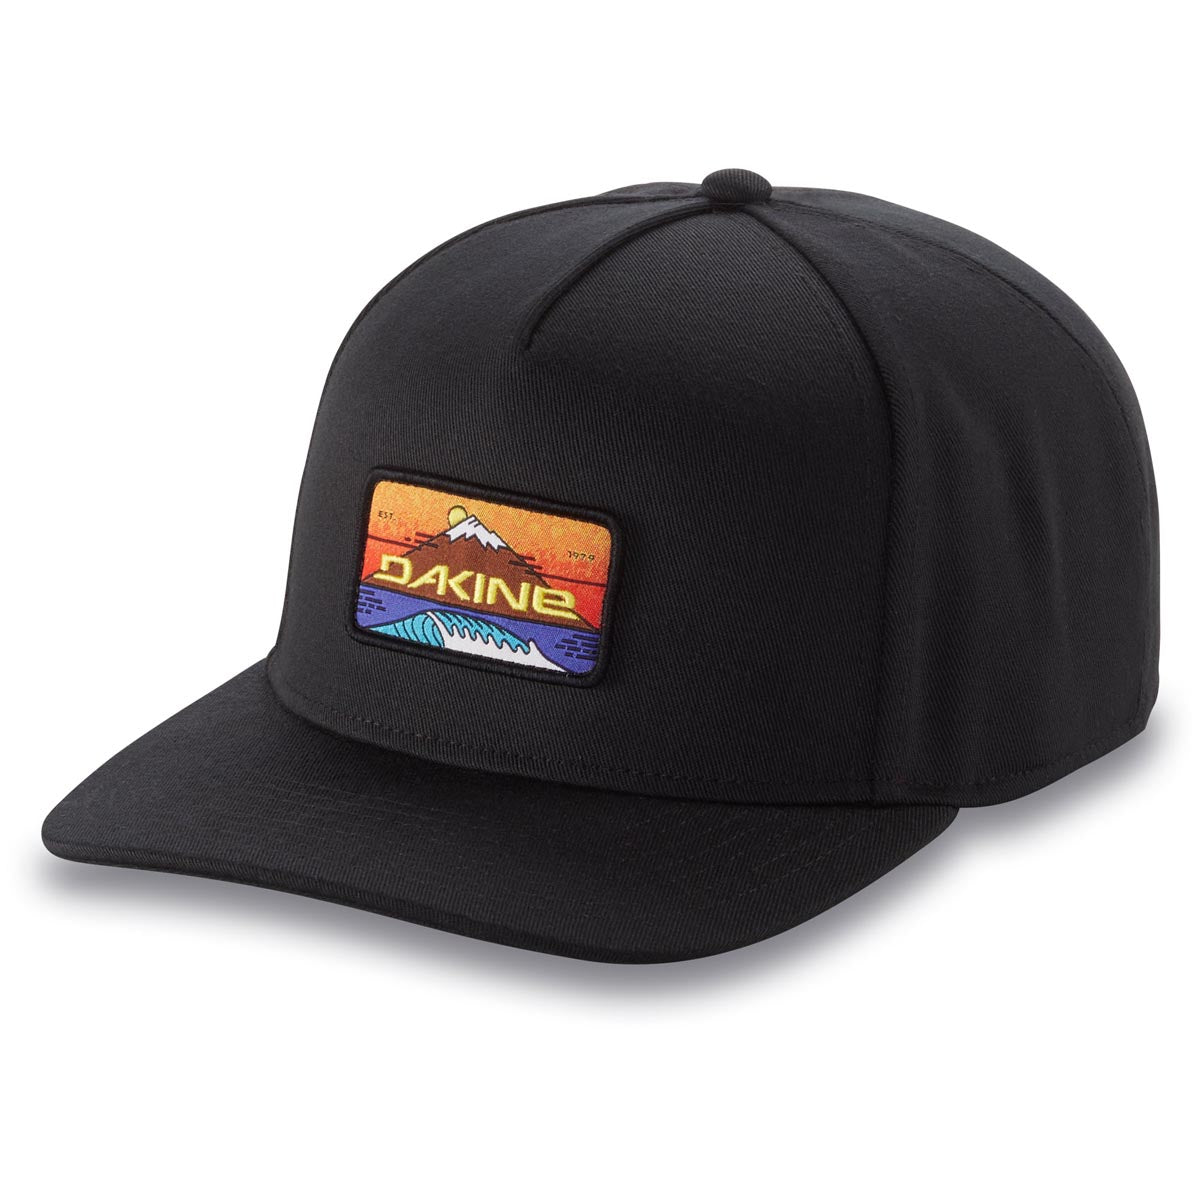 Dakine All Sports Patch Ball Hat - Black image 1